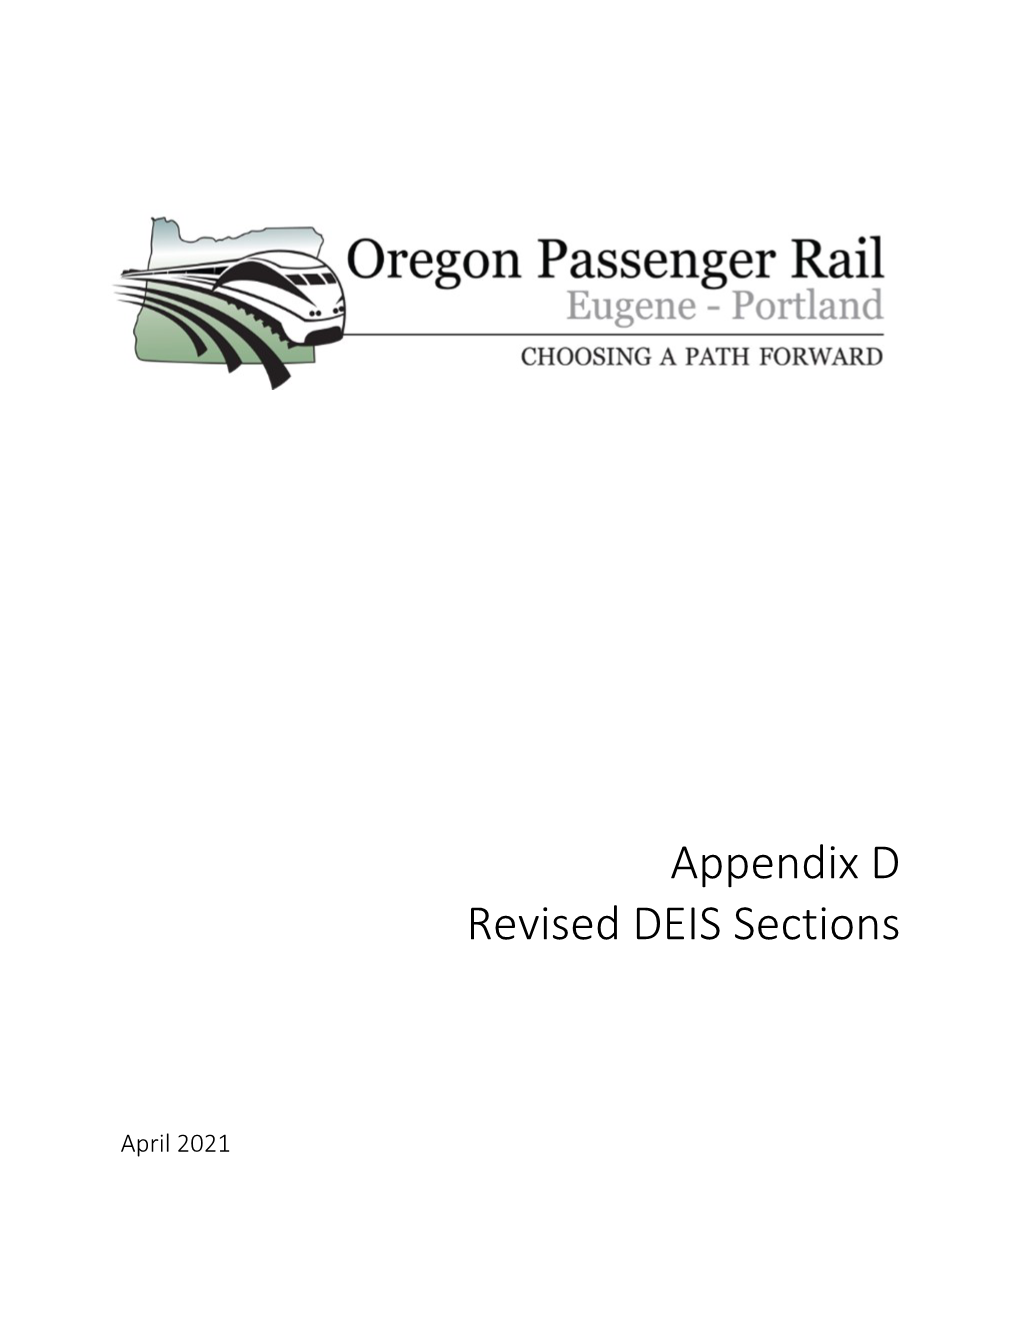 Oregon Passenger Rail Tier 1 Final Environmental Impact